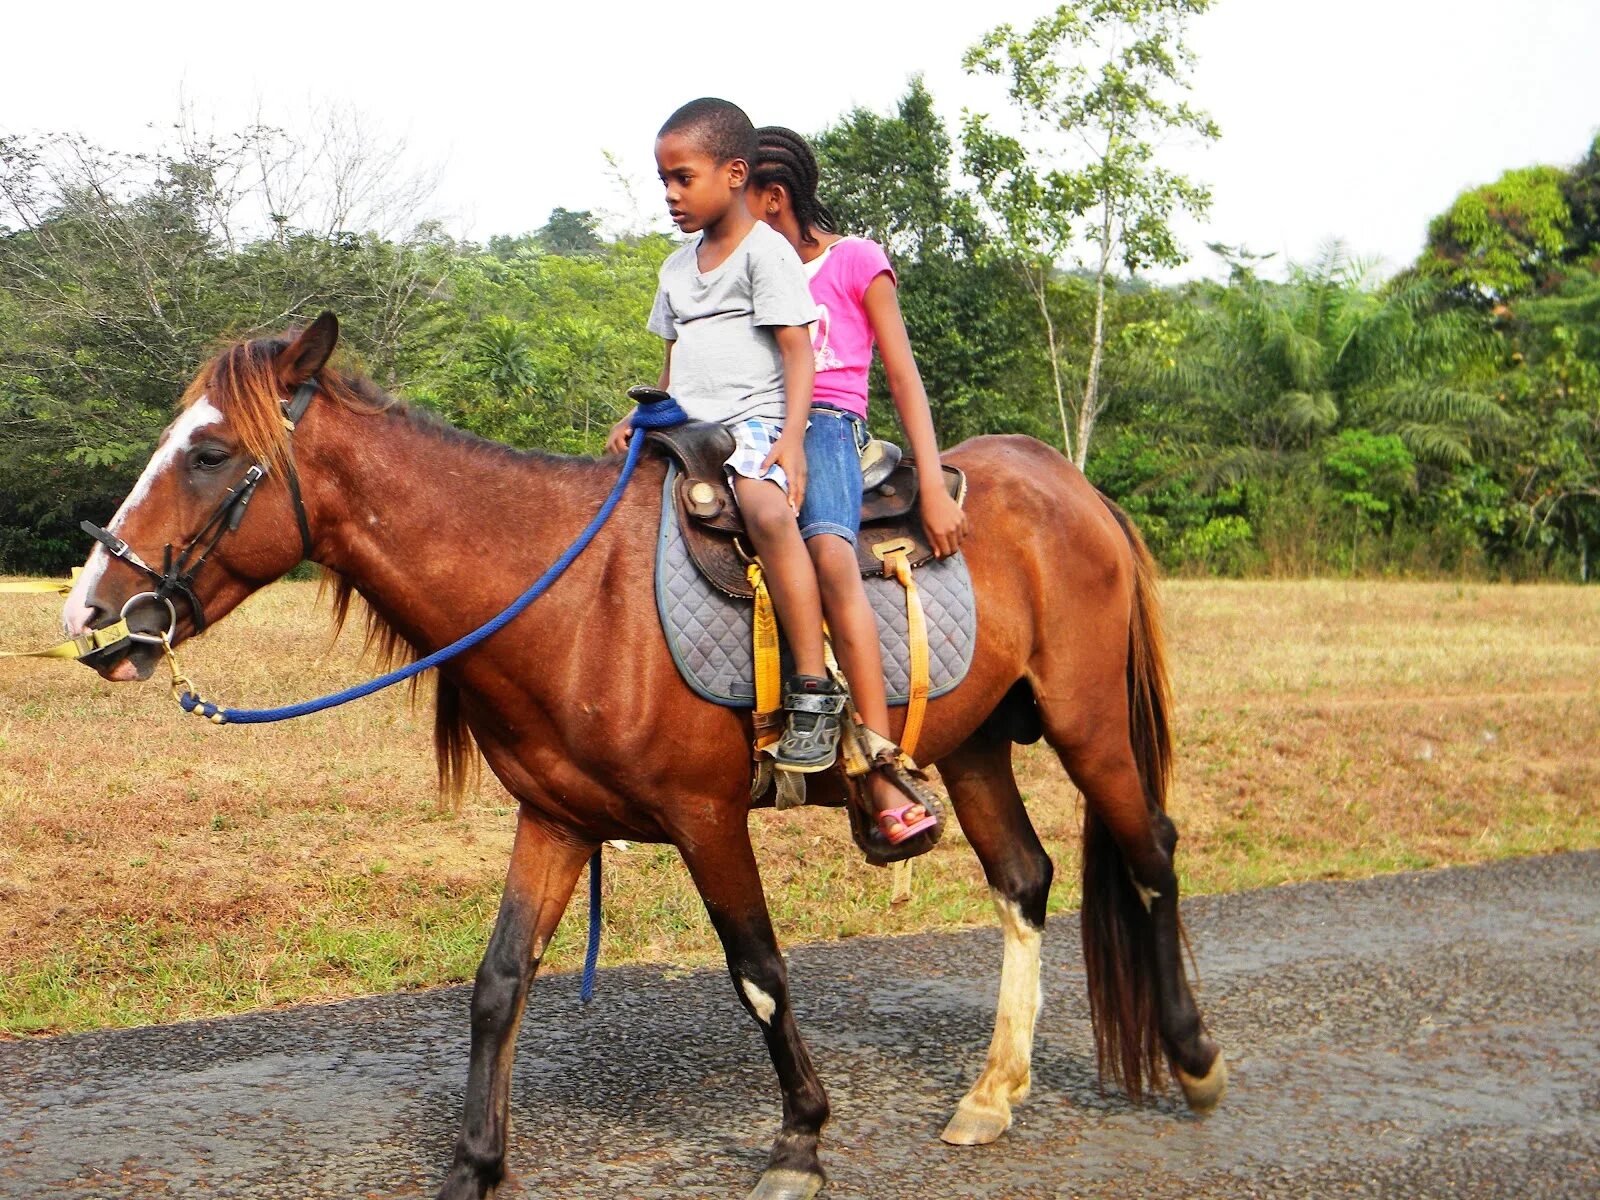 Horse and Kids. Kid Ride Horse. Horse Kiddie Ride. Horse riding Kids. Riding around